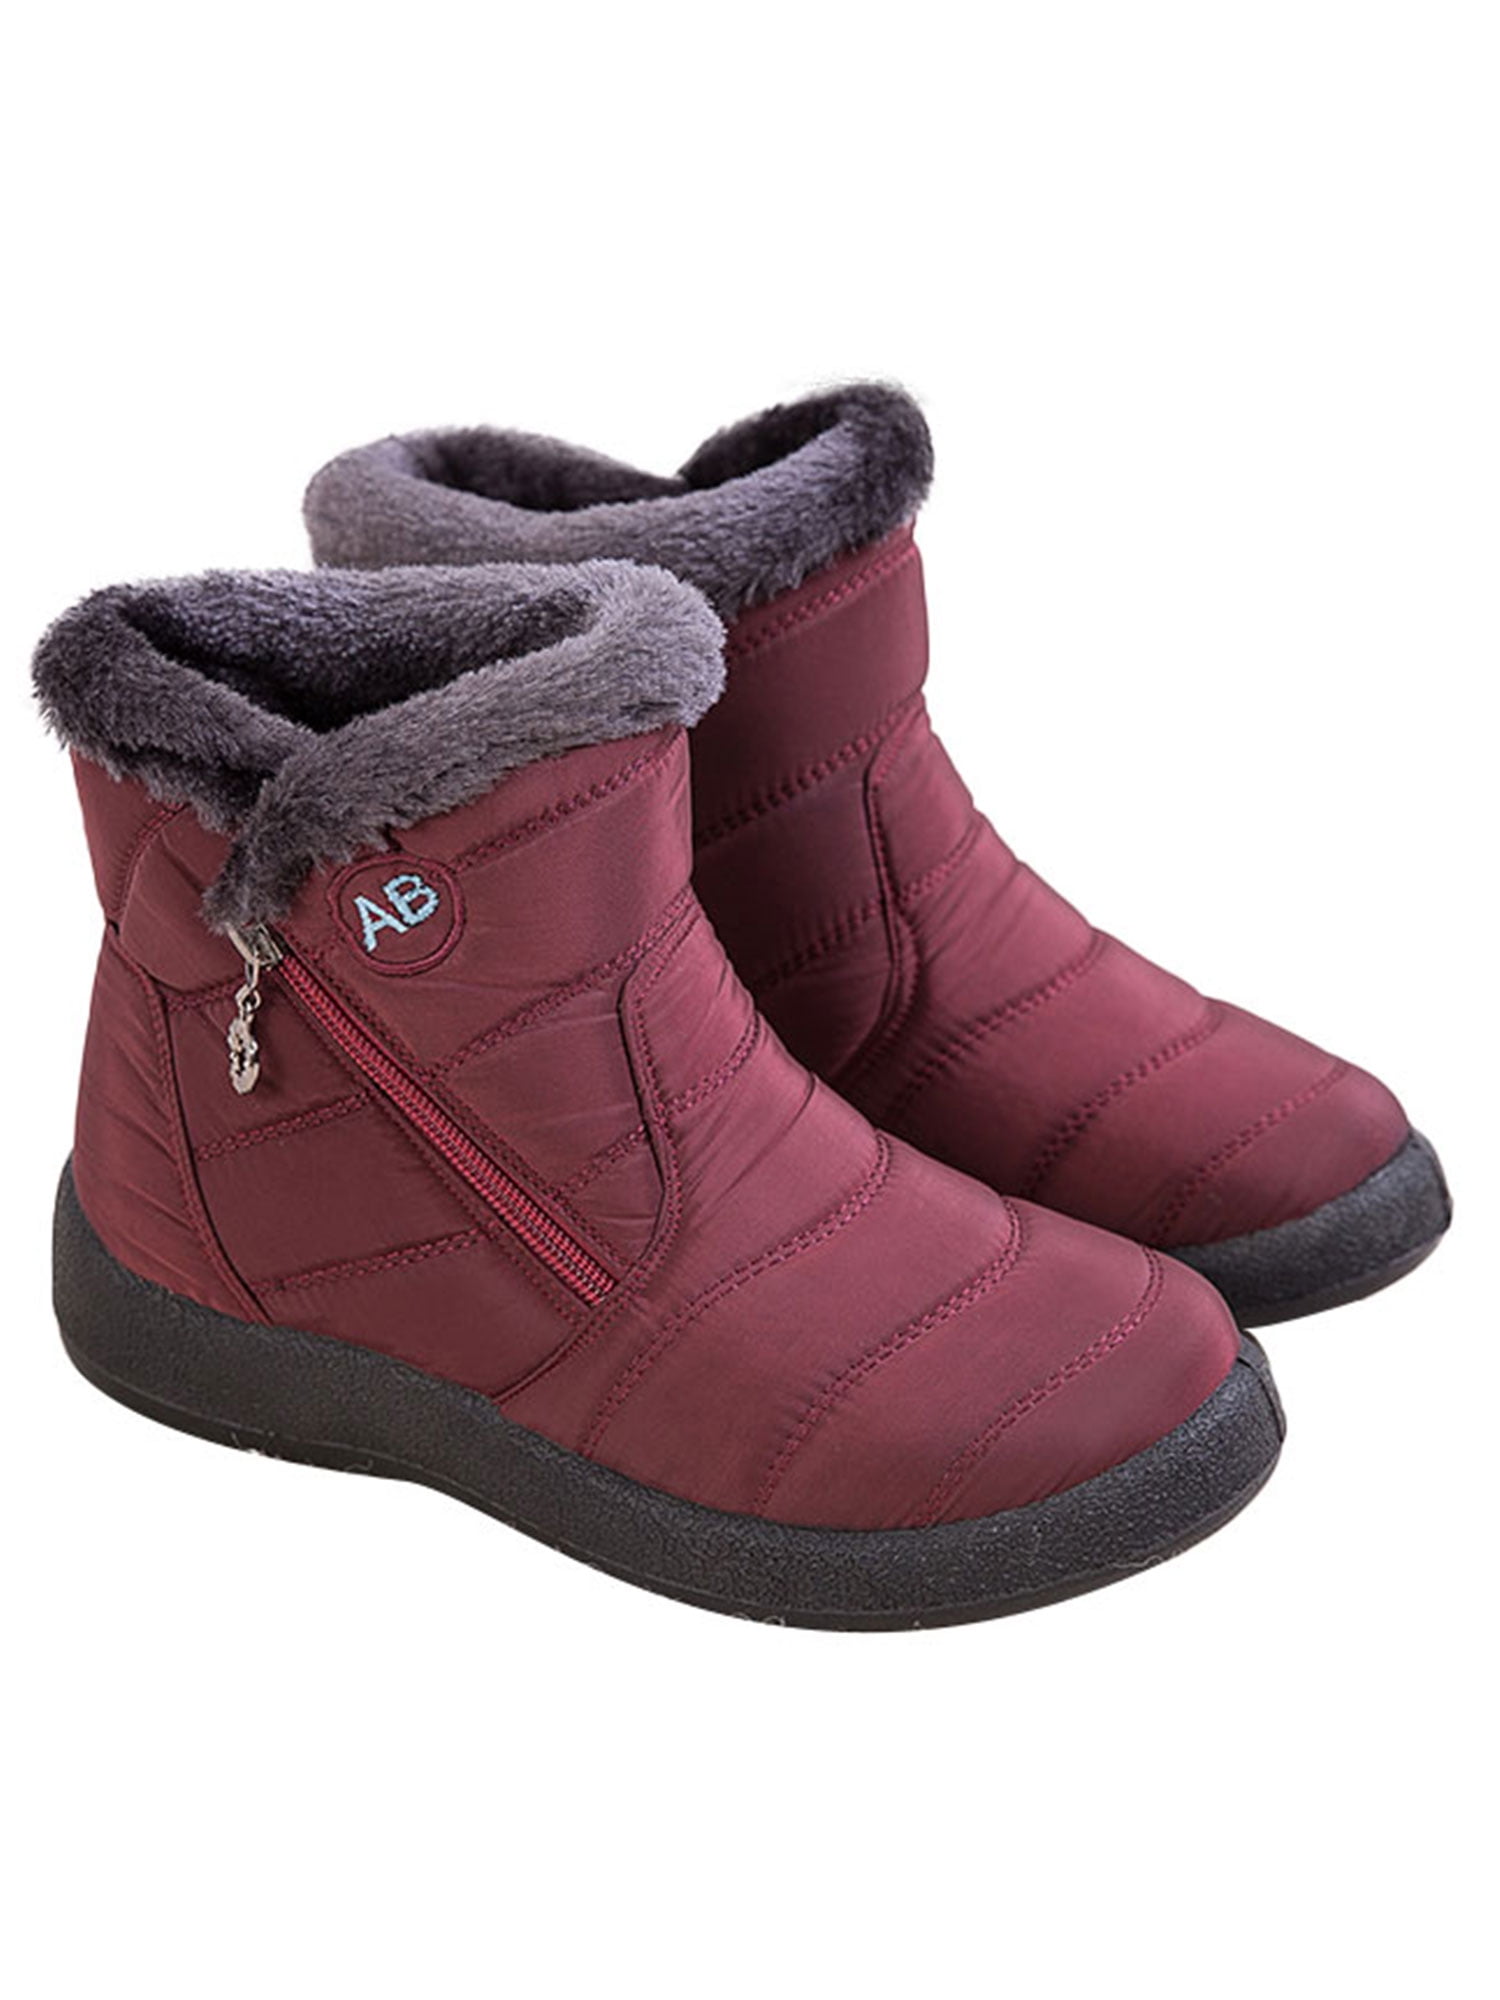 Super frist Christmas Womens Warm Snow Boots Waterproof Down Booties Platform Fur Lined Winter high Boots